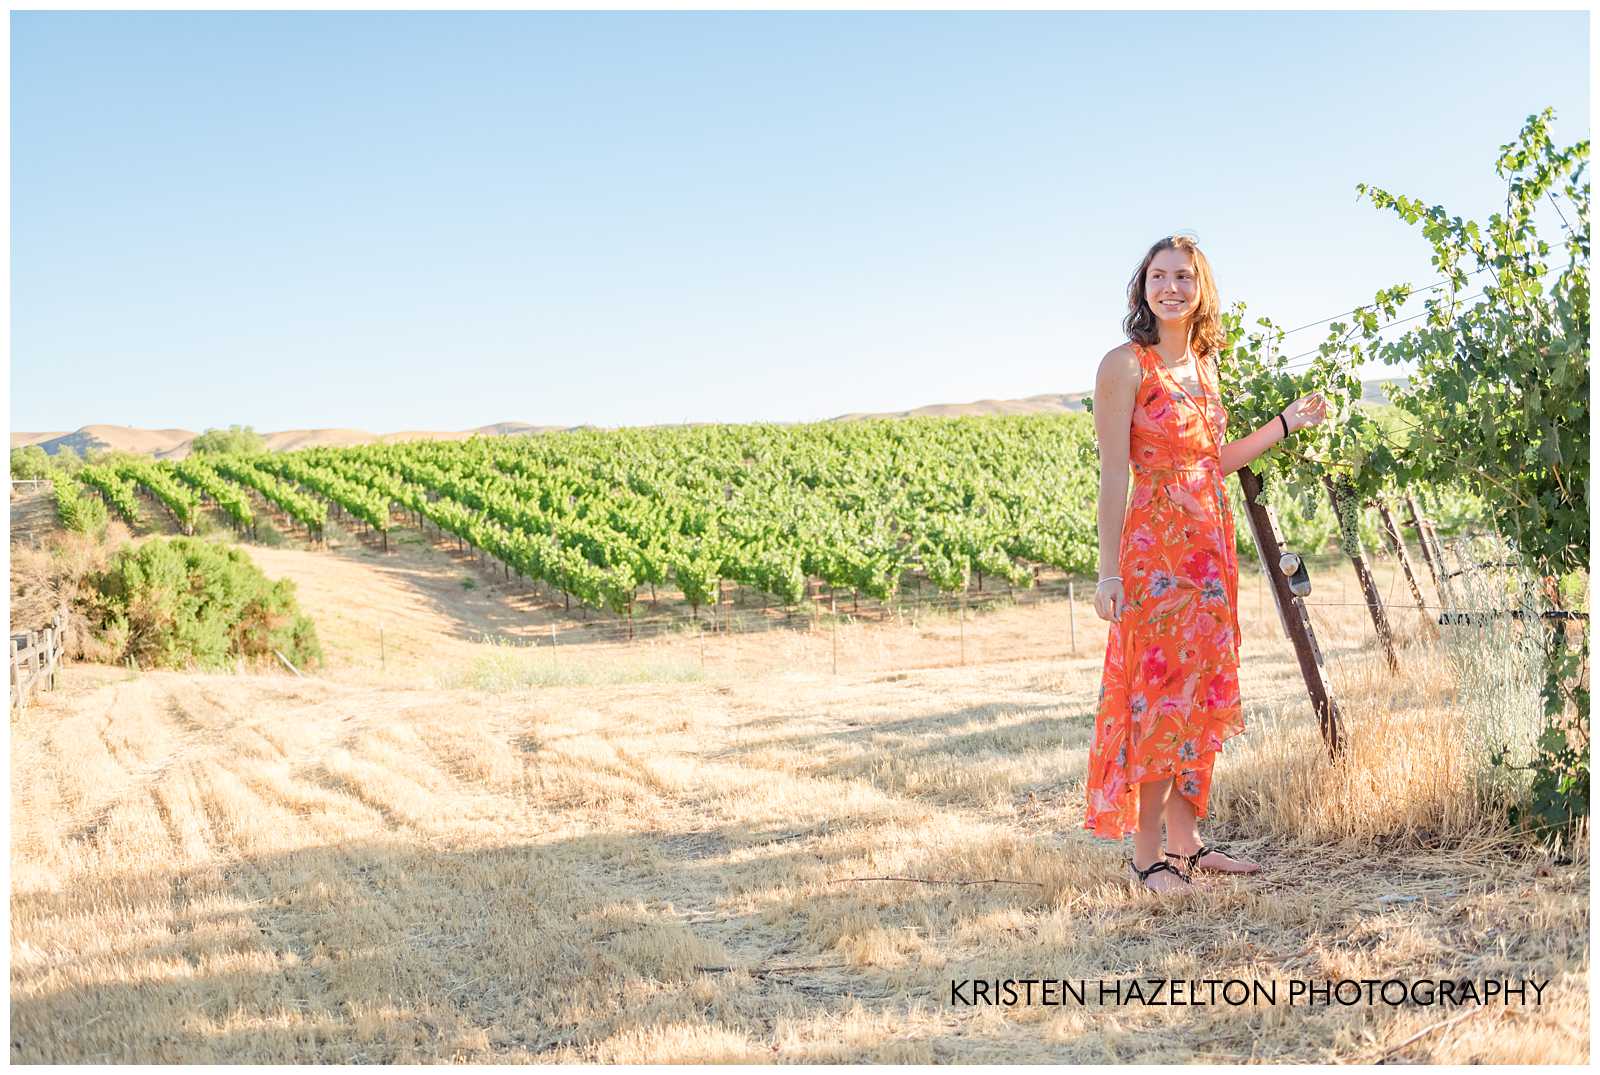 Girl in orange dress standing next to grape vines